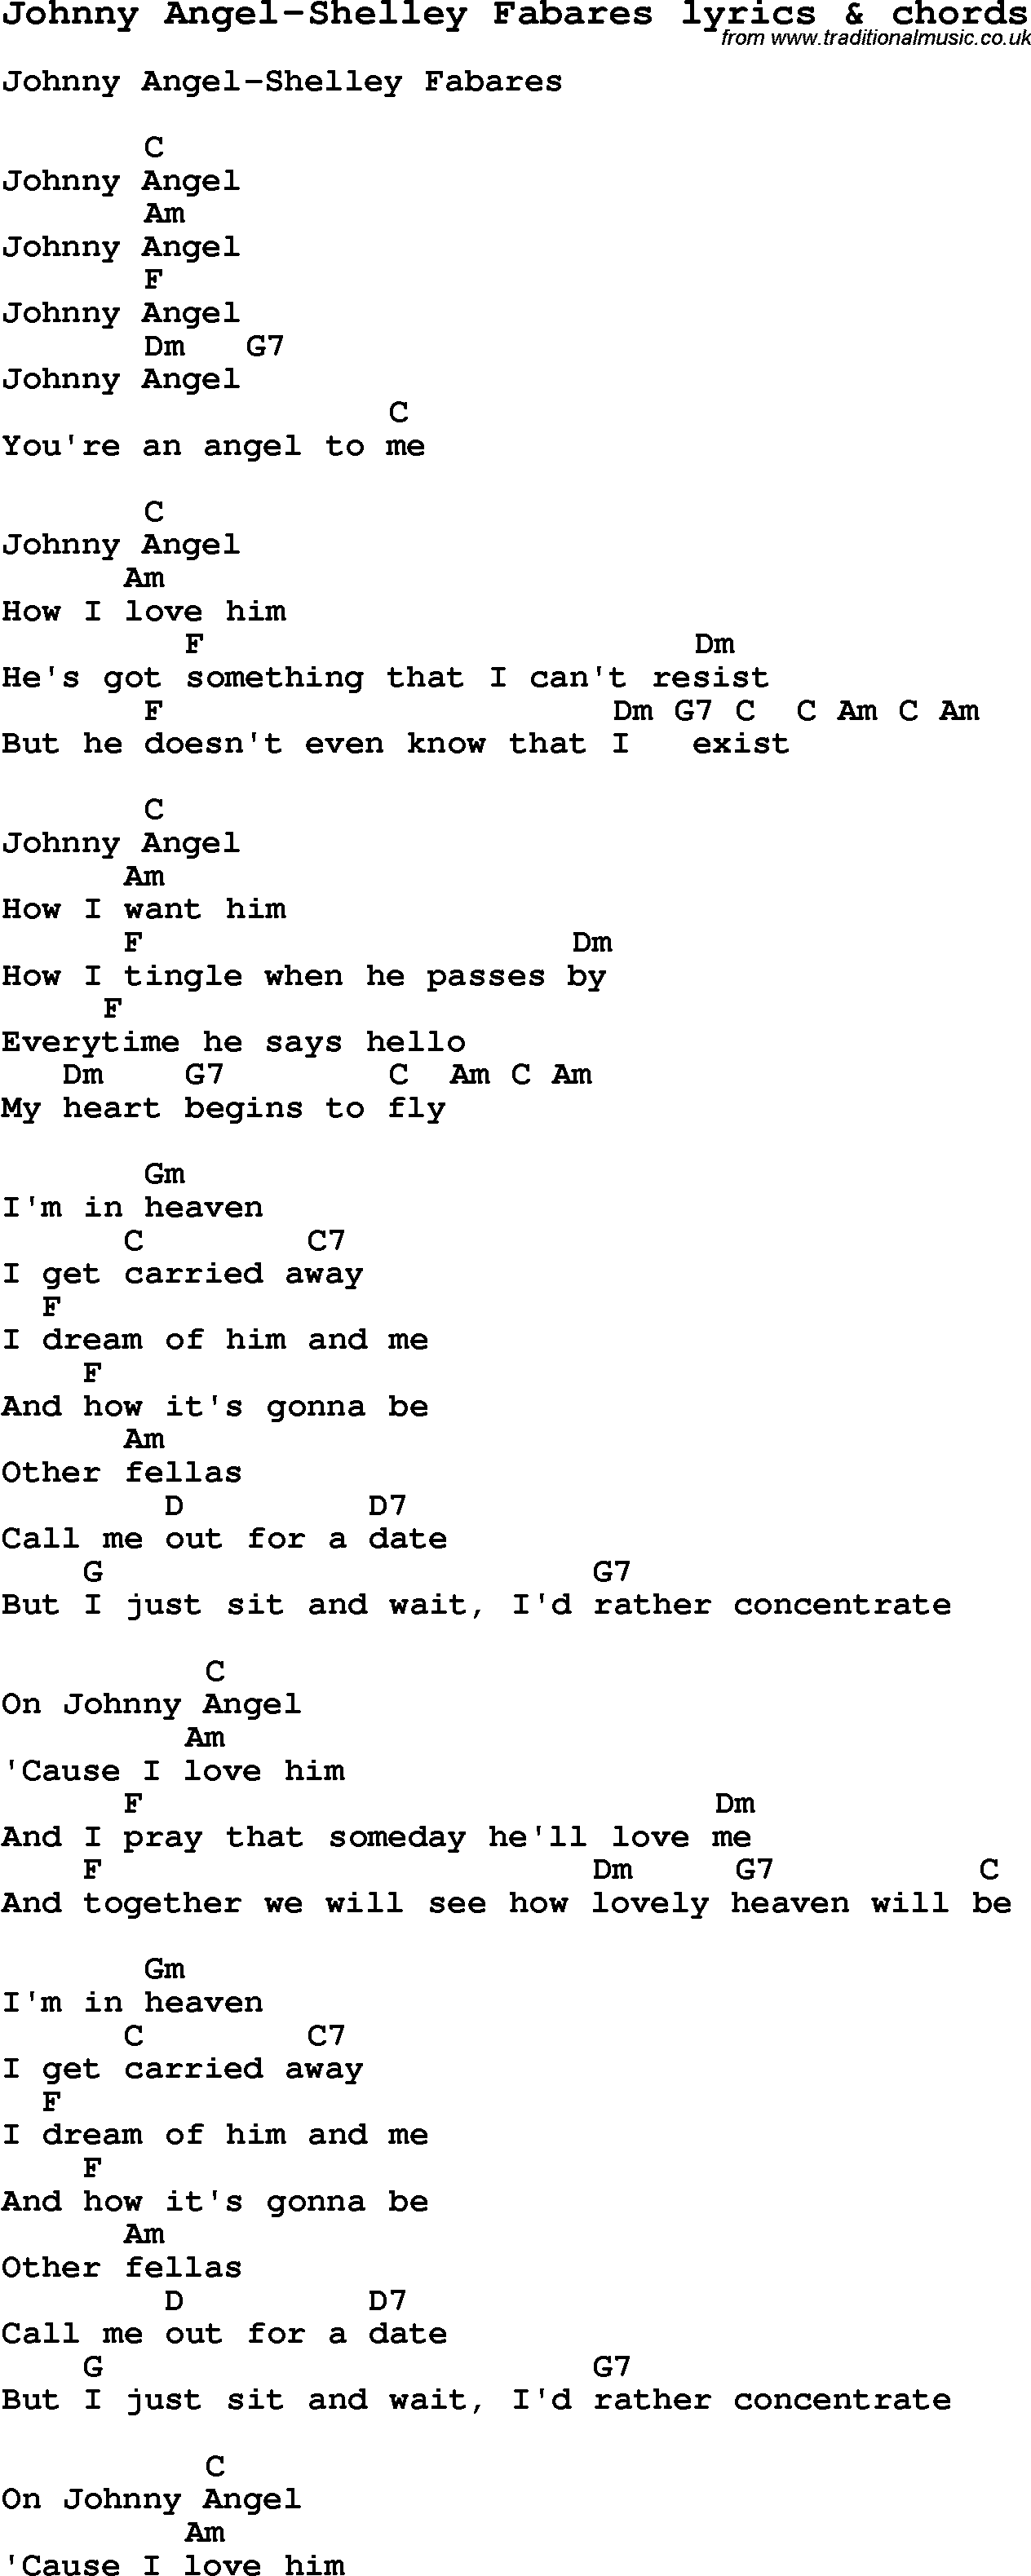 Love Song Lyrics for: Johnny Angel-Shelley Fabares with chords for Ukulele, Guitar Banjo etc.